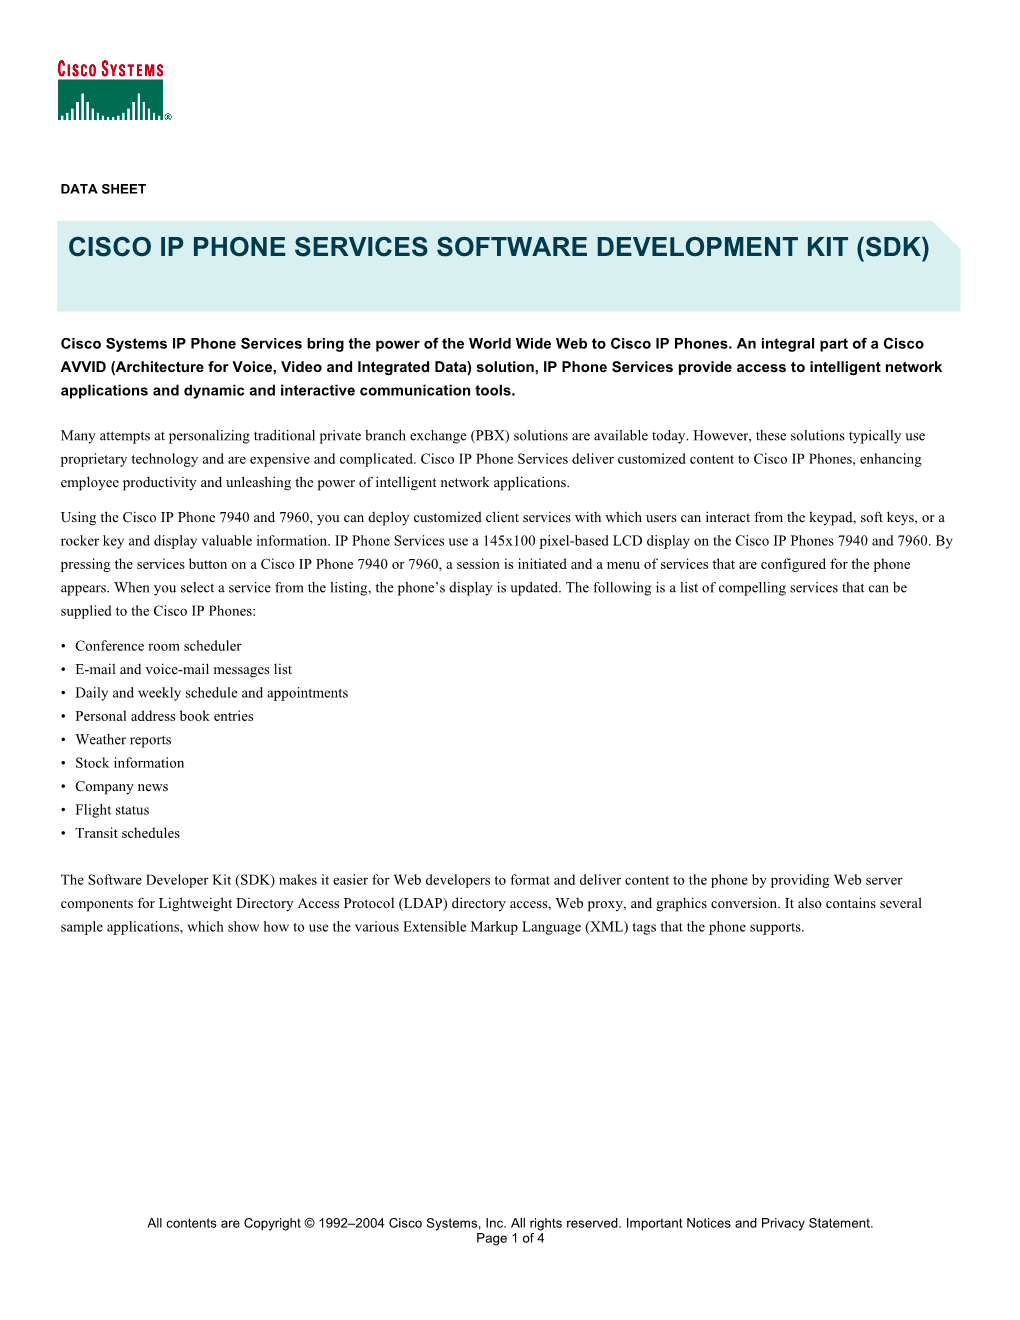 Cisco Ip Phone Services Software Development Kit (Sdk)